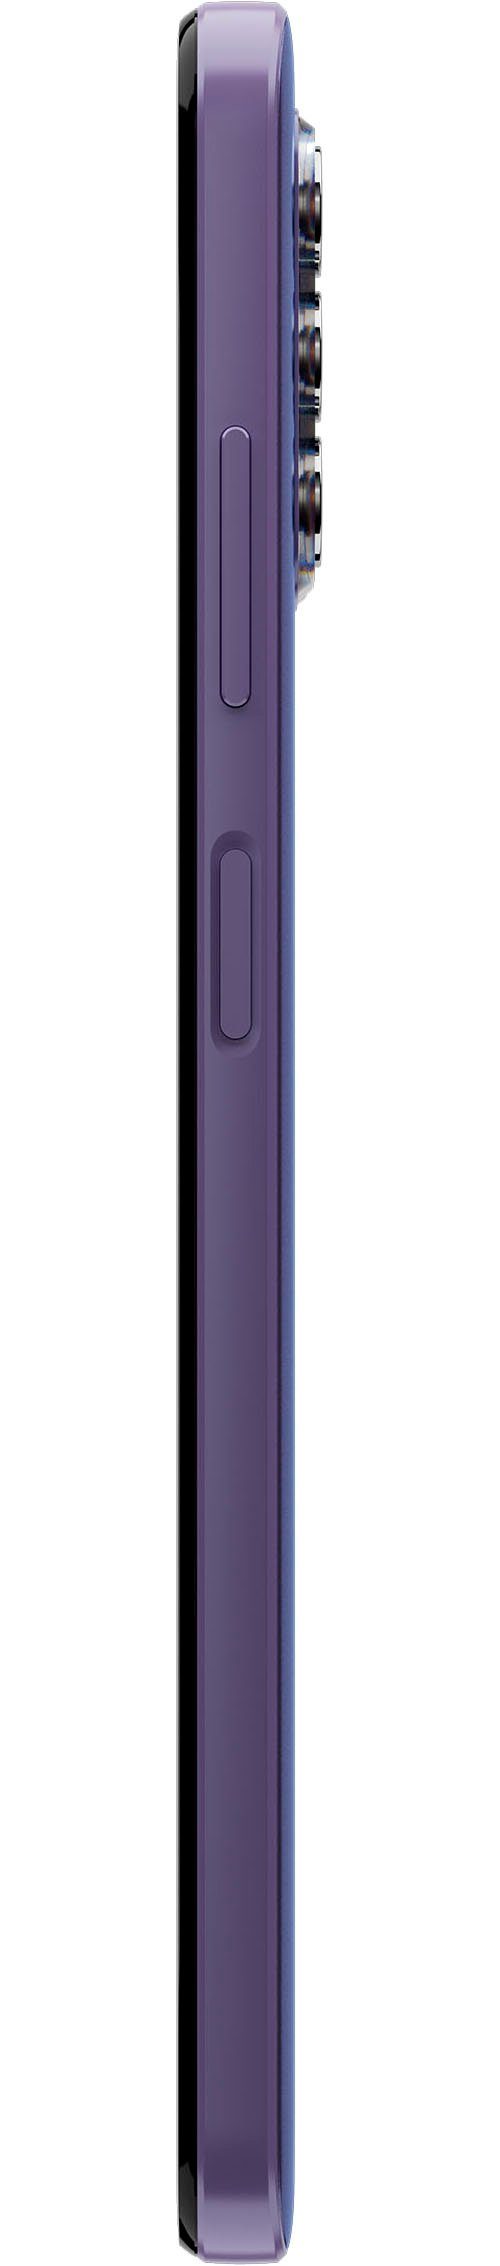 Nokia G42 50 purple Speicherplatz, cm/6,65 (16,9 128 MP GB Kamera) Zoll, Smartphone